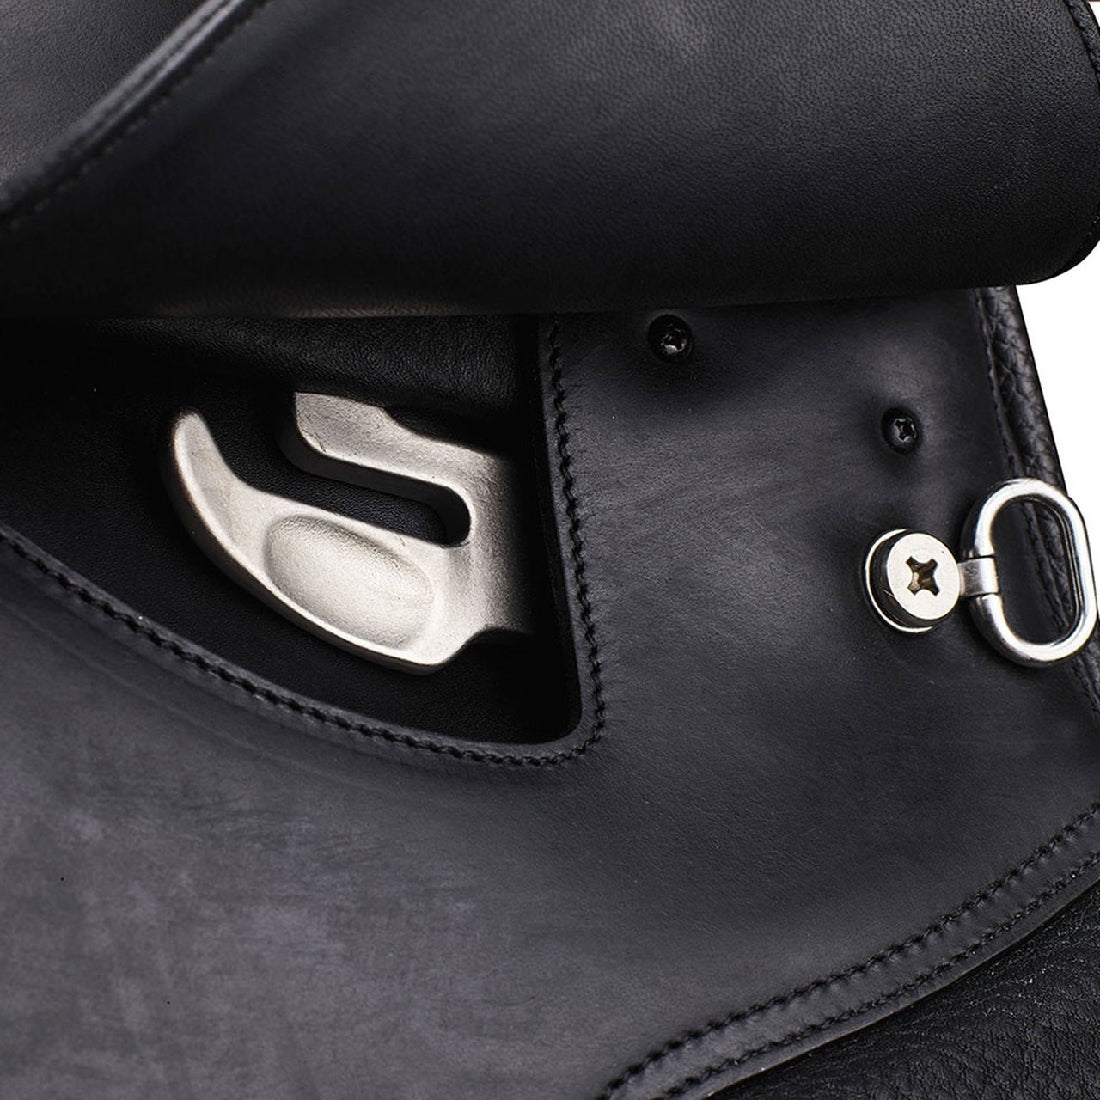 Close-up of black Arena Saddles stirrup and leather craftsmanship.